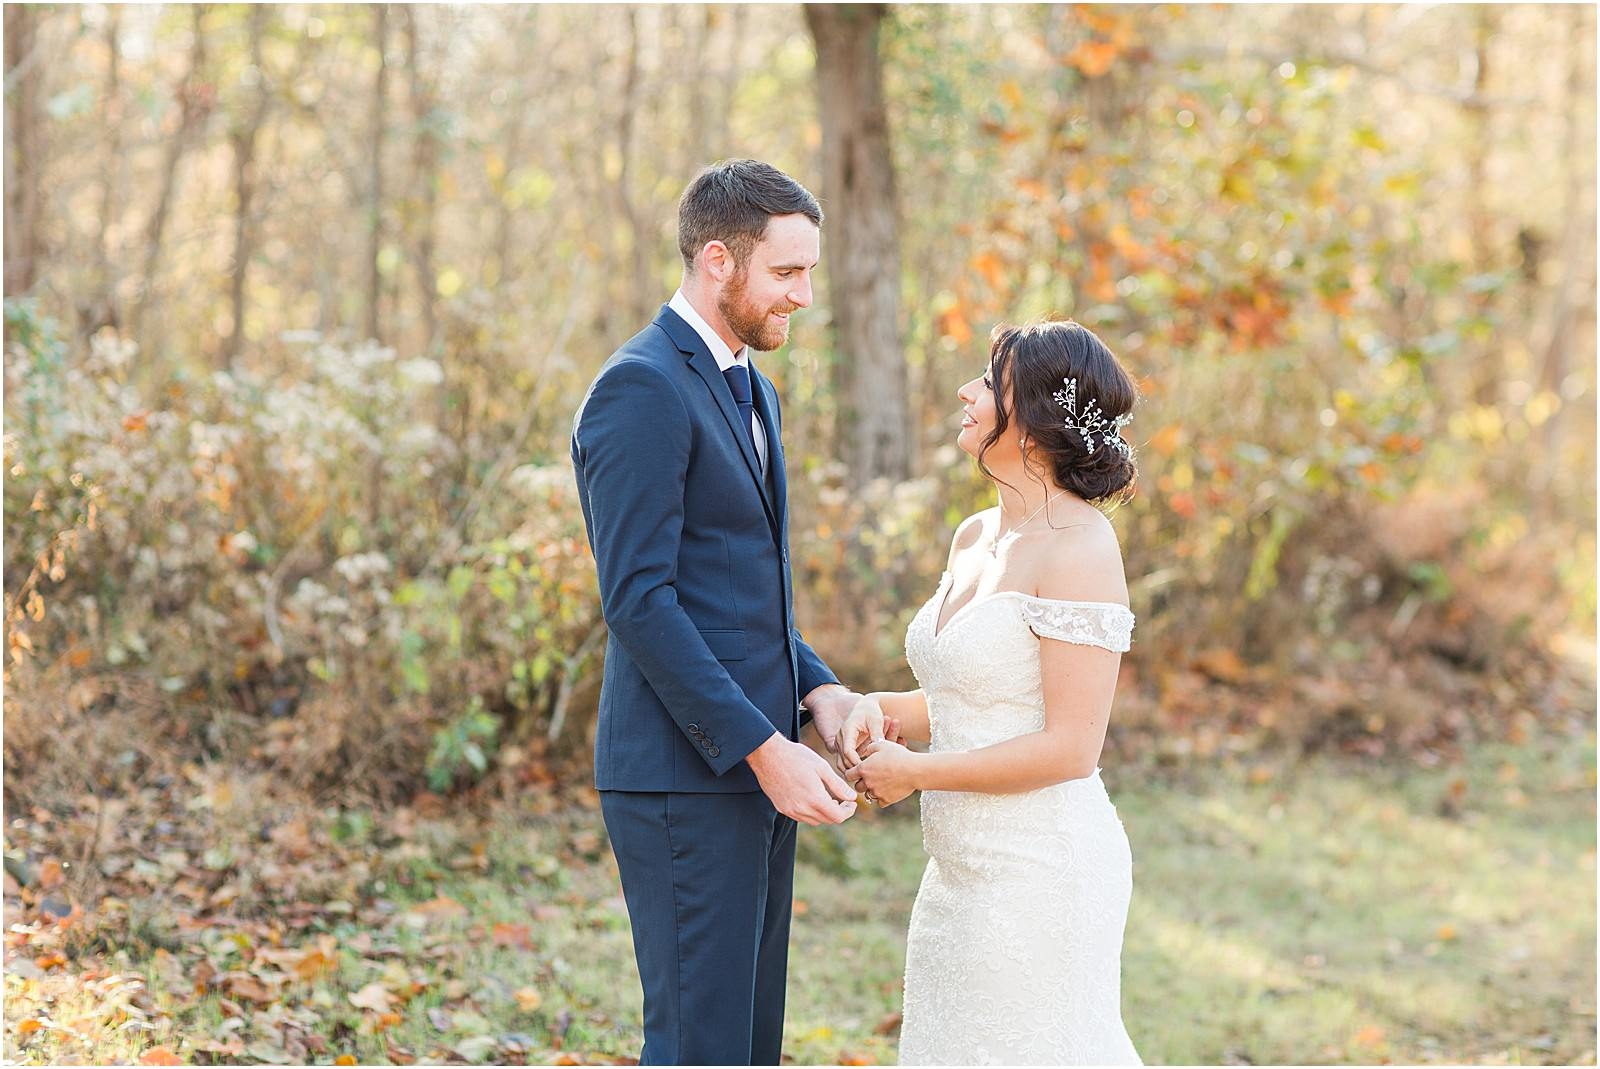 Walker and Alyssa's intimate fall wedding in Southern Indiana. | Wedding Photography | The Corner House Wedding | Southern Indiana Wedding | #fallwedding #intimatewedding | 030.jpg